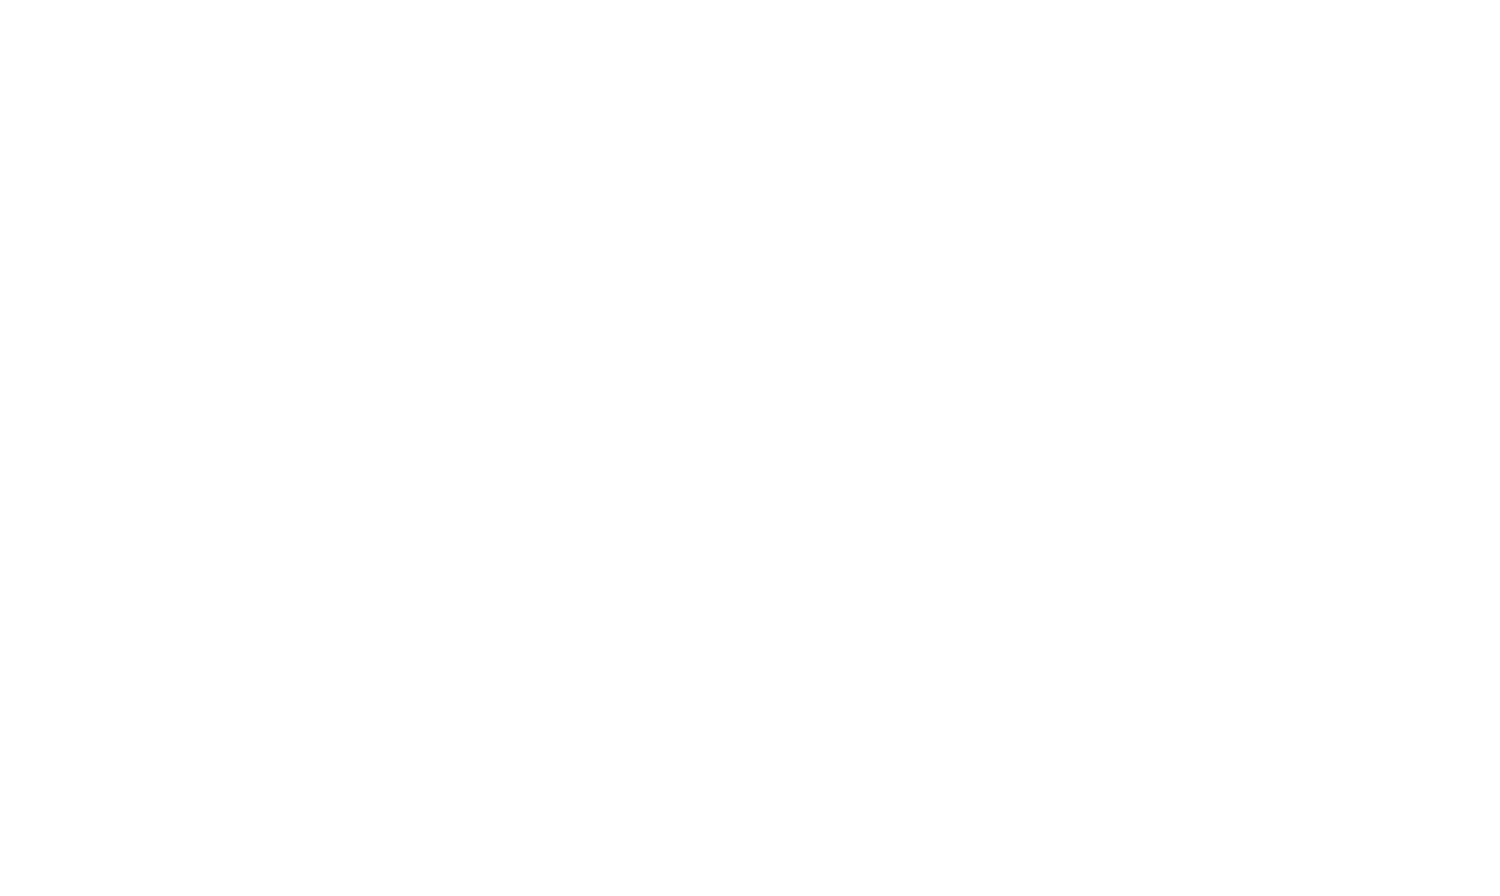 Ewing Collective